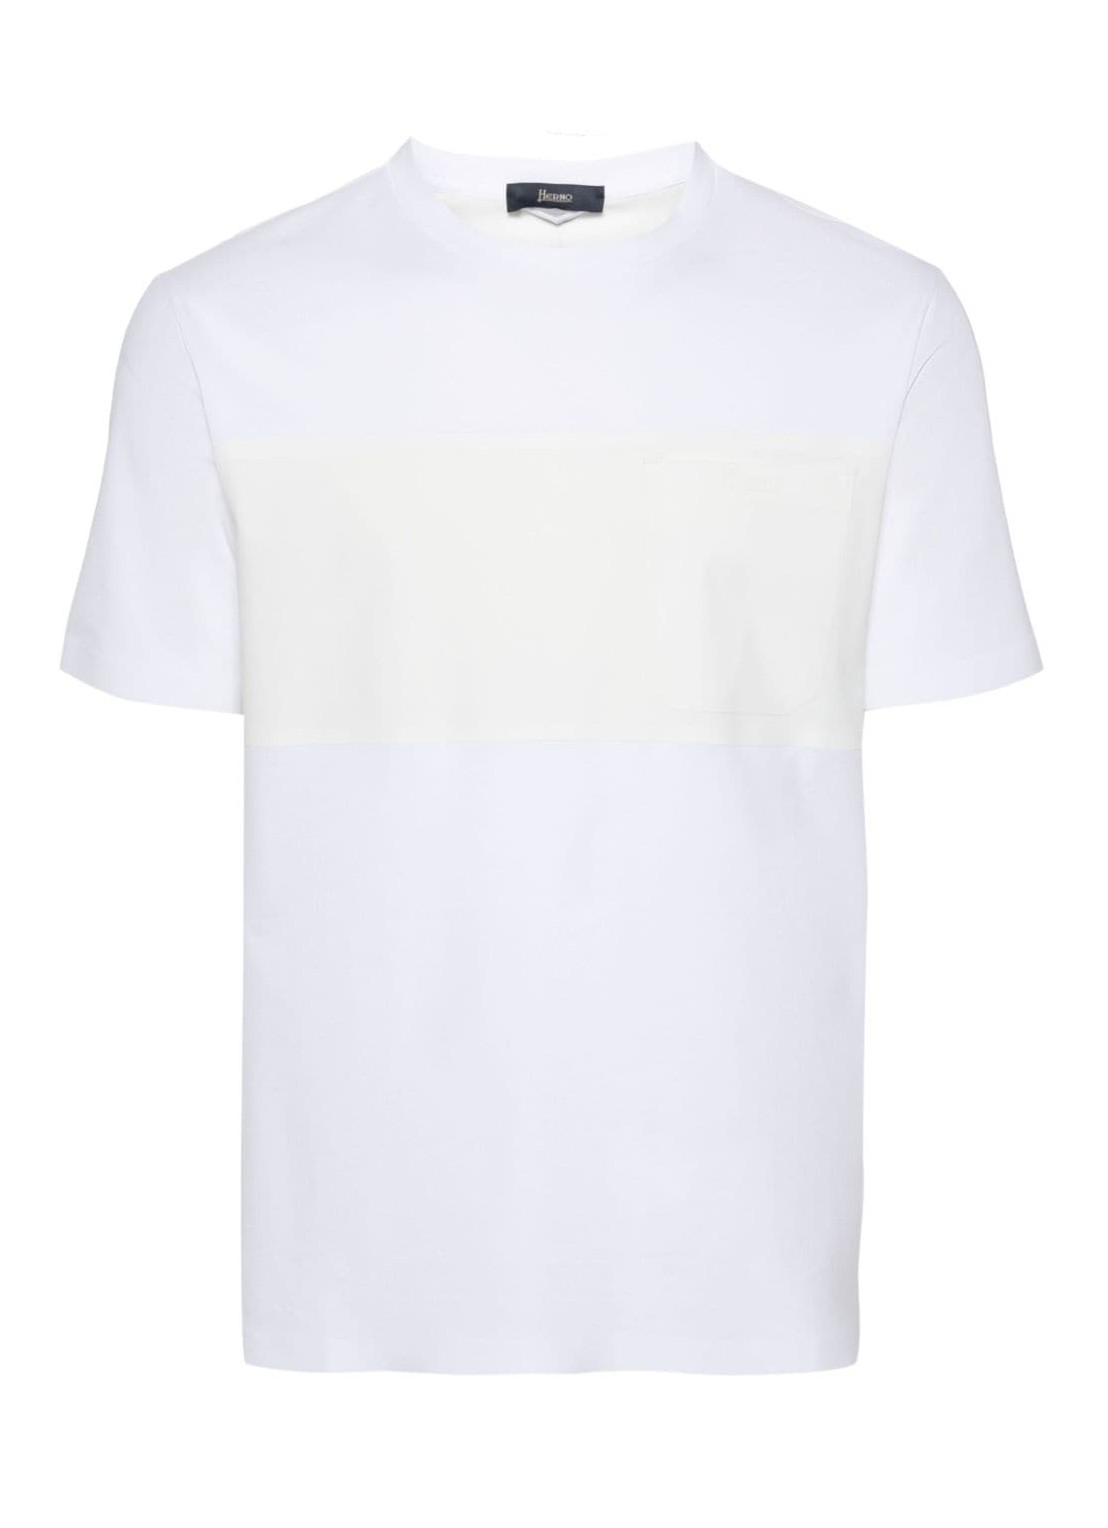 Camiseta herno t-shirt man superfine cotton stretch jg000199u52003 1000 talla 52
 